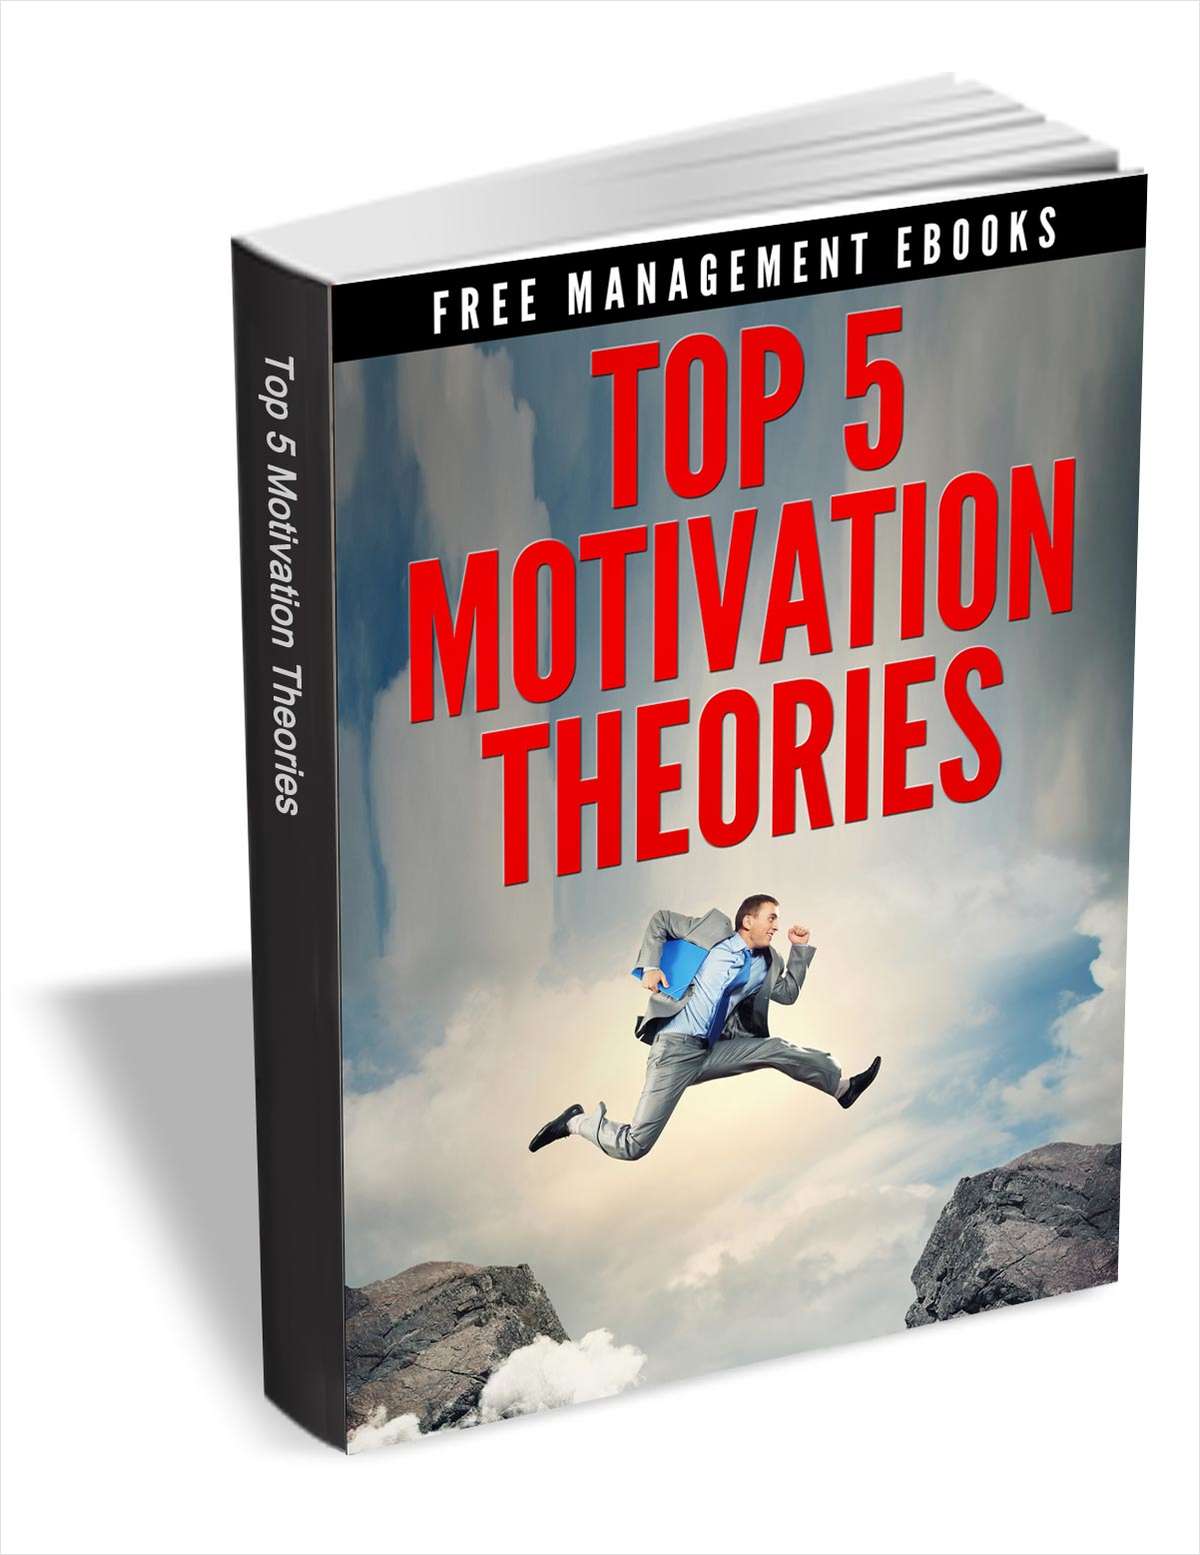 Top 5 Motivation Theories